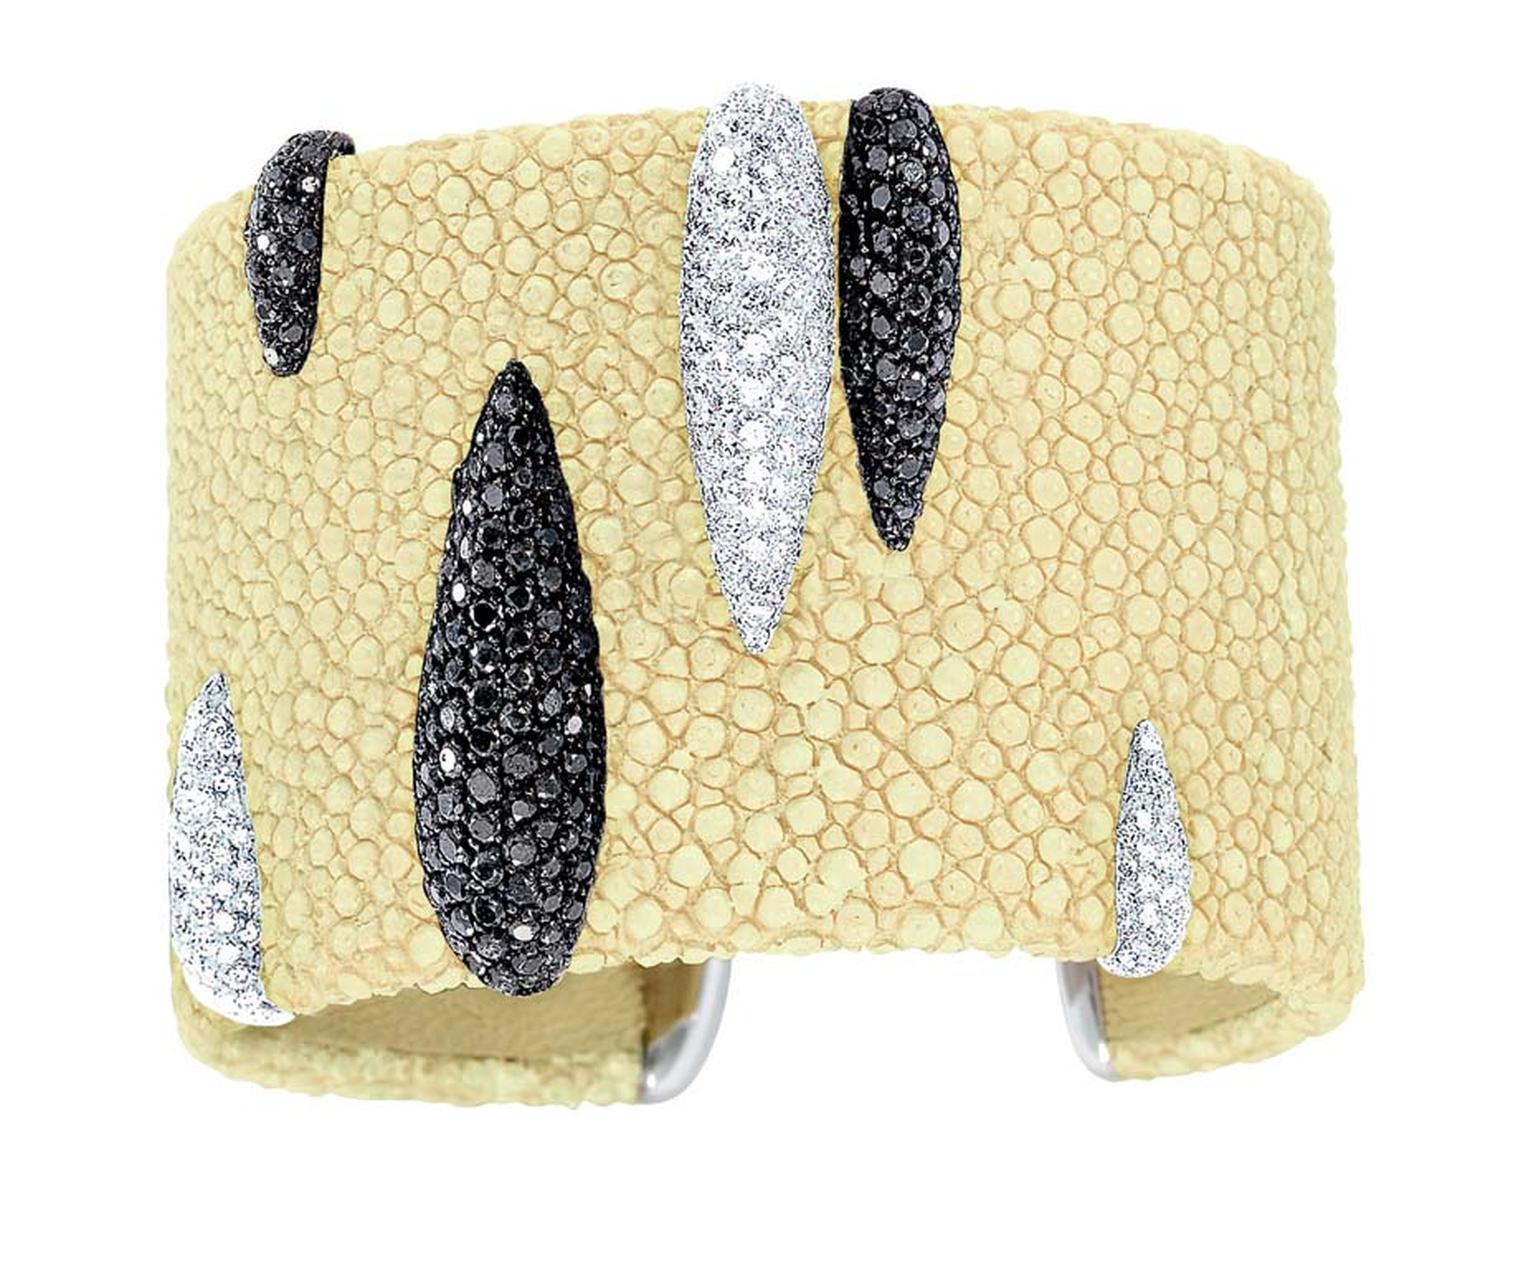 de GRISOGONO Stingray cuff with white and black diamonds, as worn by Cara Delevingne